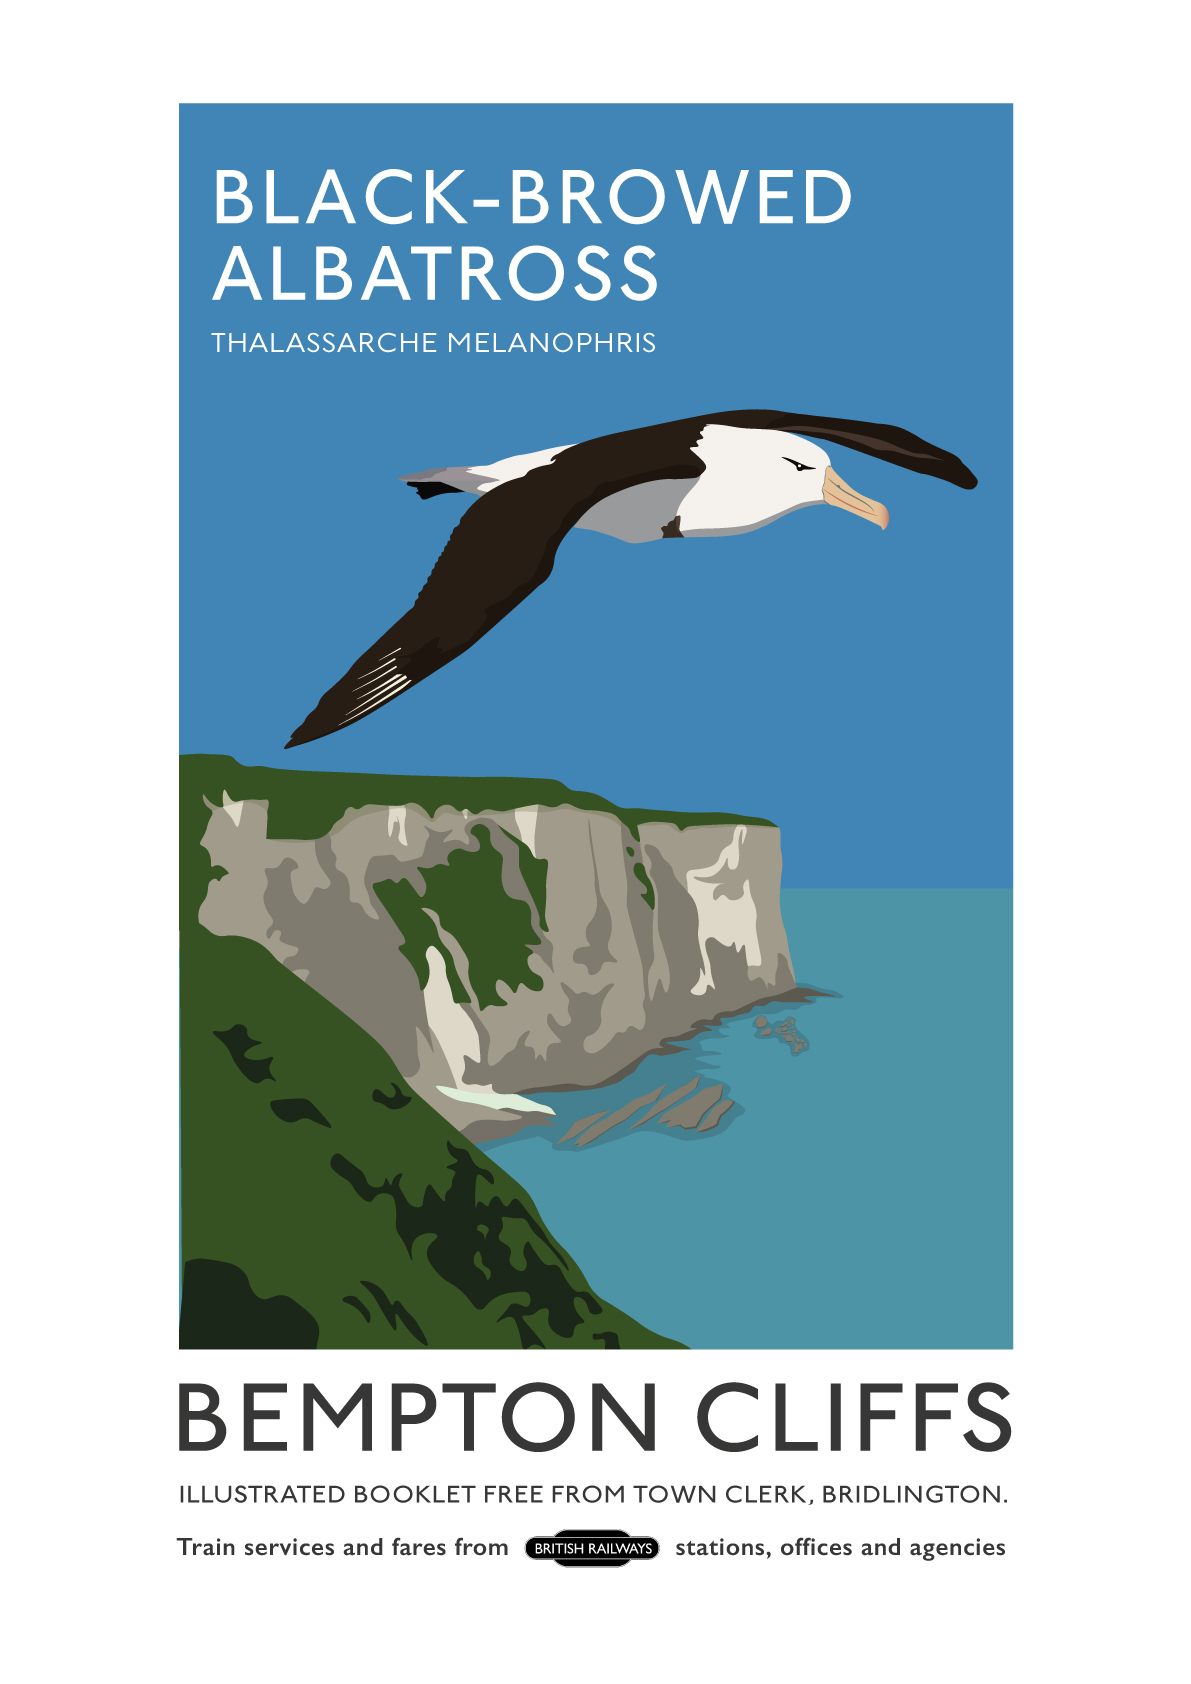 RSPB Bempton Cliffs Black-Browed Albatross Poster